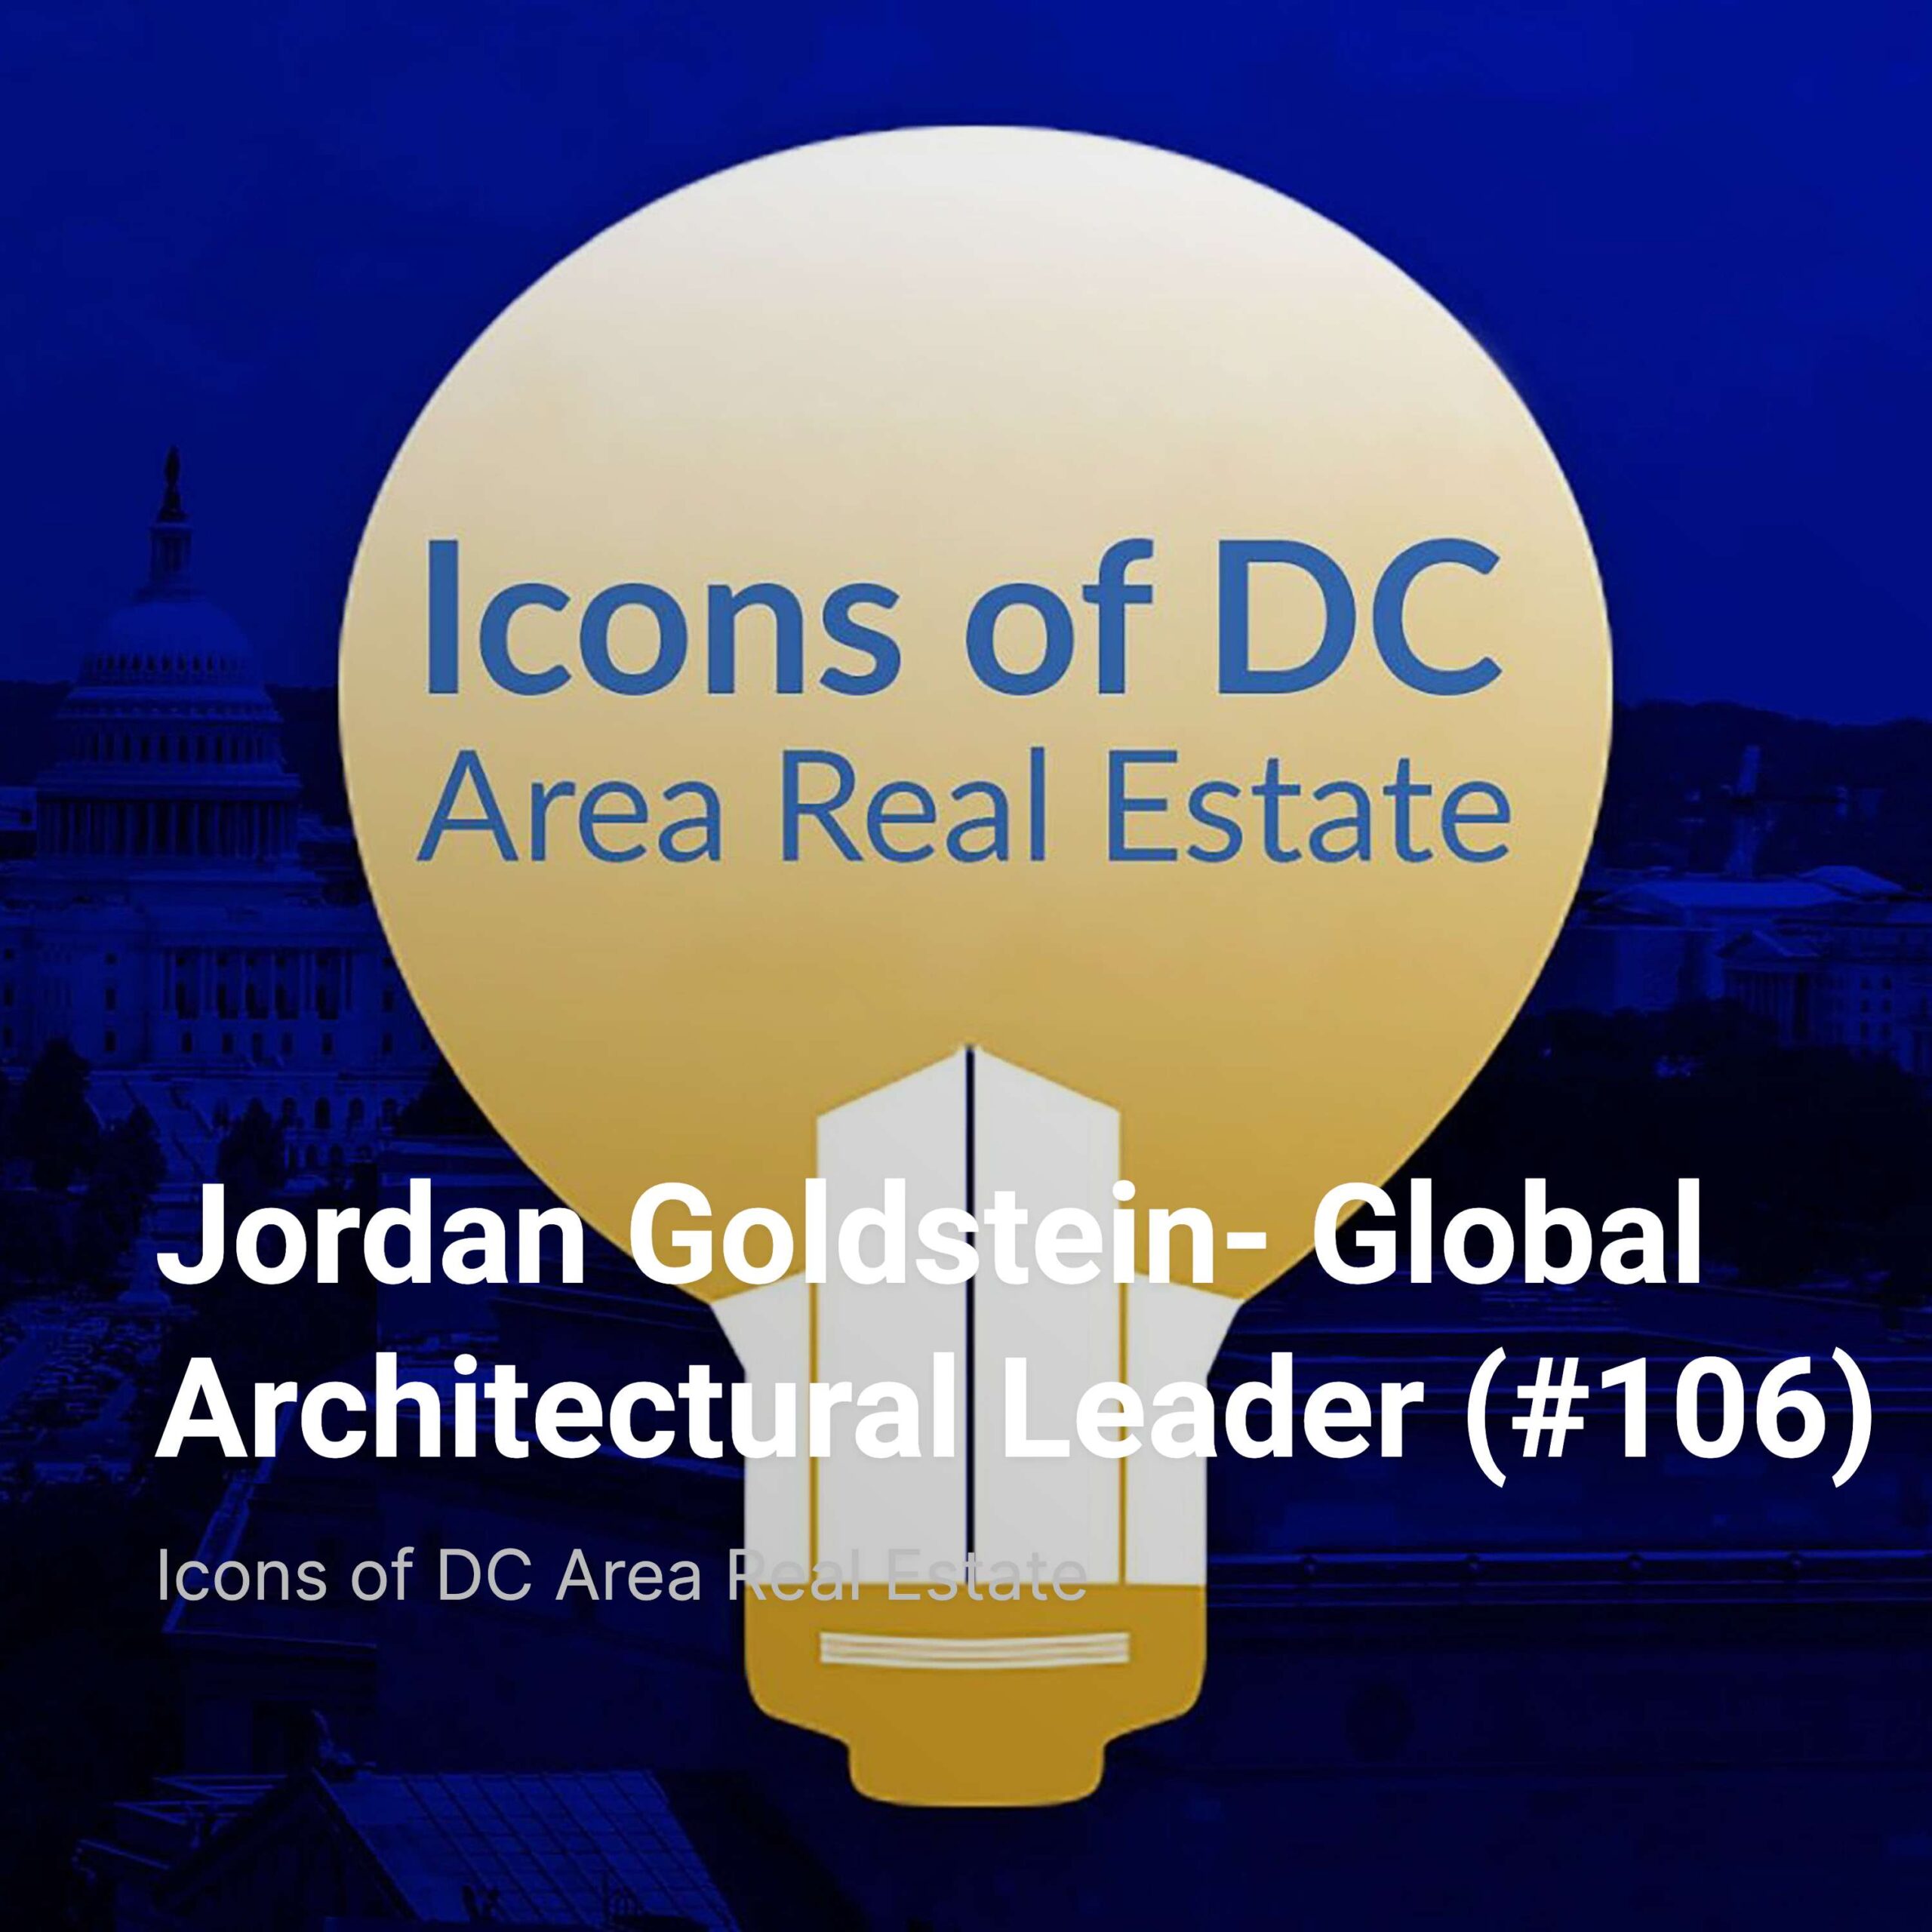 Jordan Goldstein- Global Architectural Leader (#106)